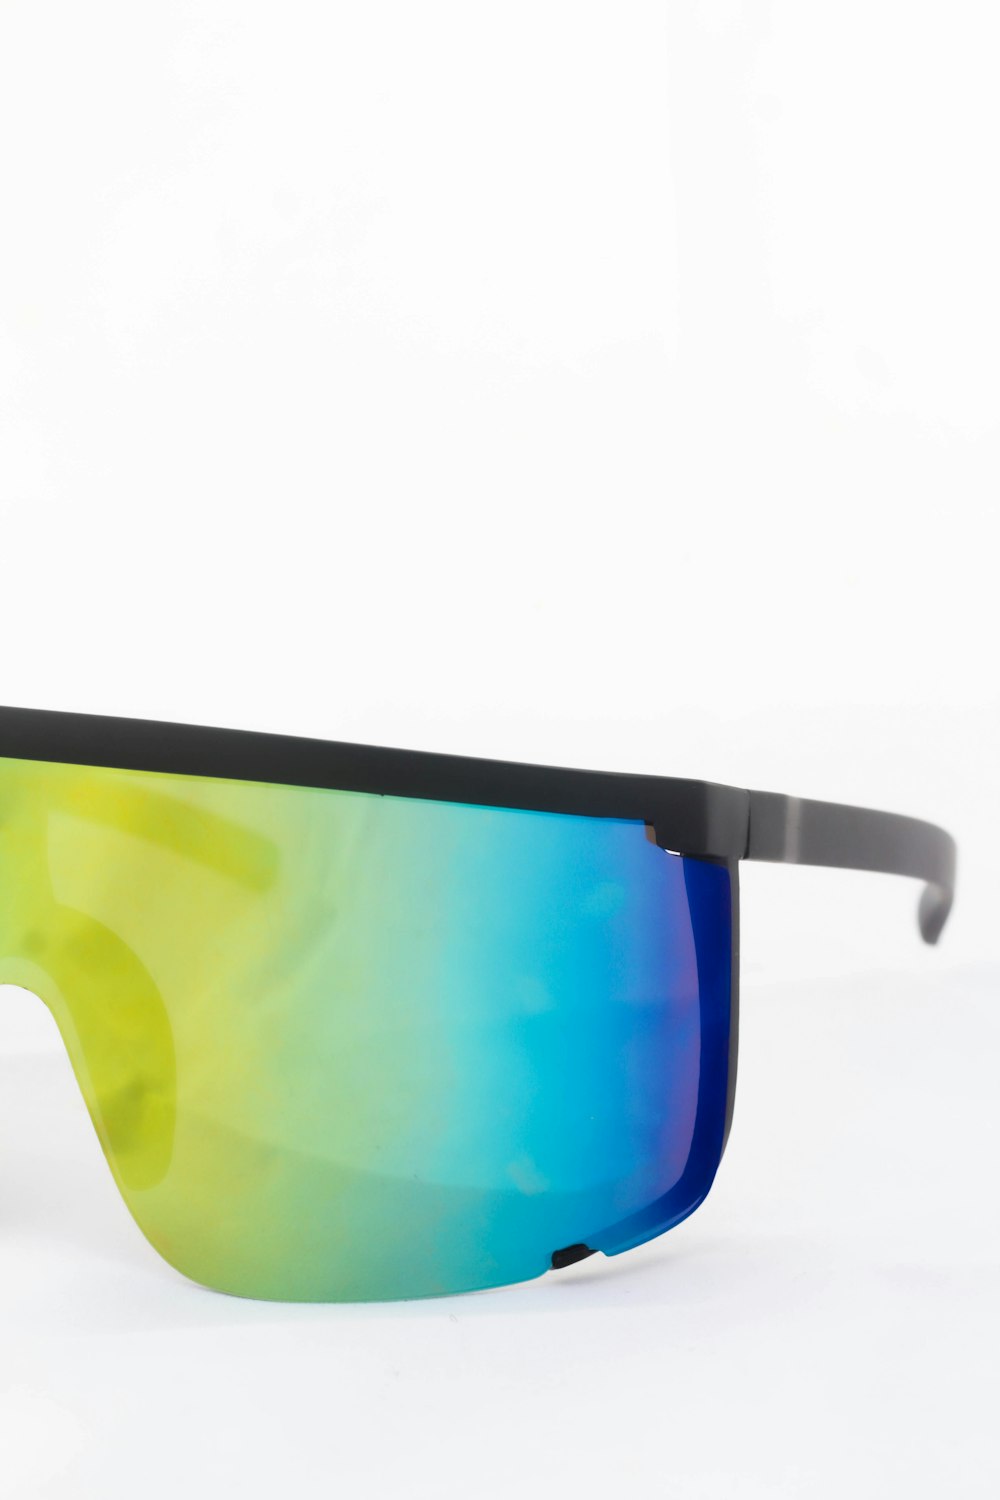 blue lens sunglasses with black frame